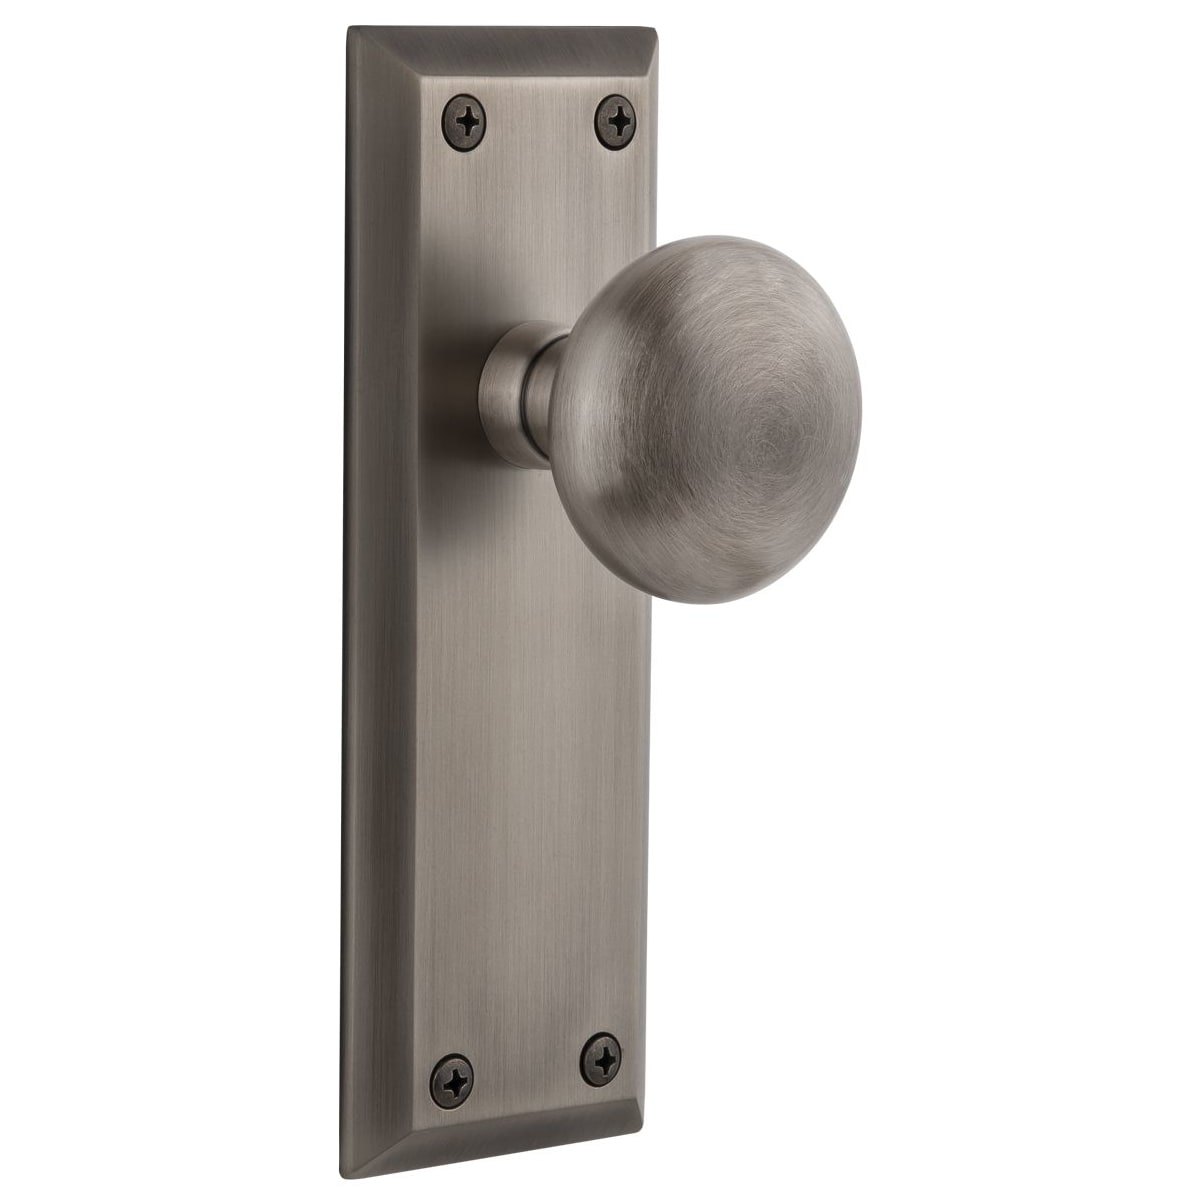 Griggs Brass Privacy Interior Door Set - Knob - 2-3/4 Backset - Satin Brass